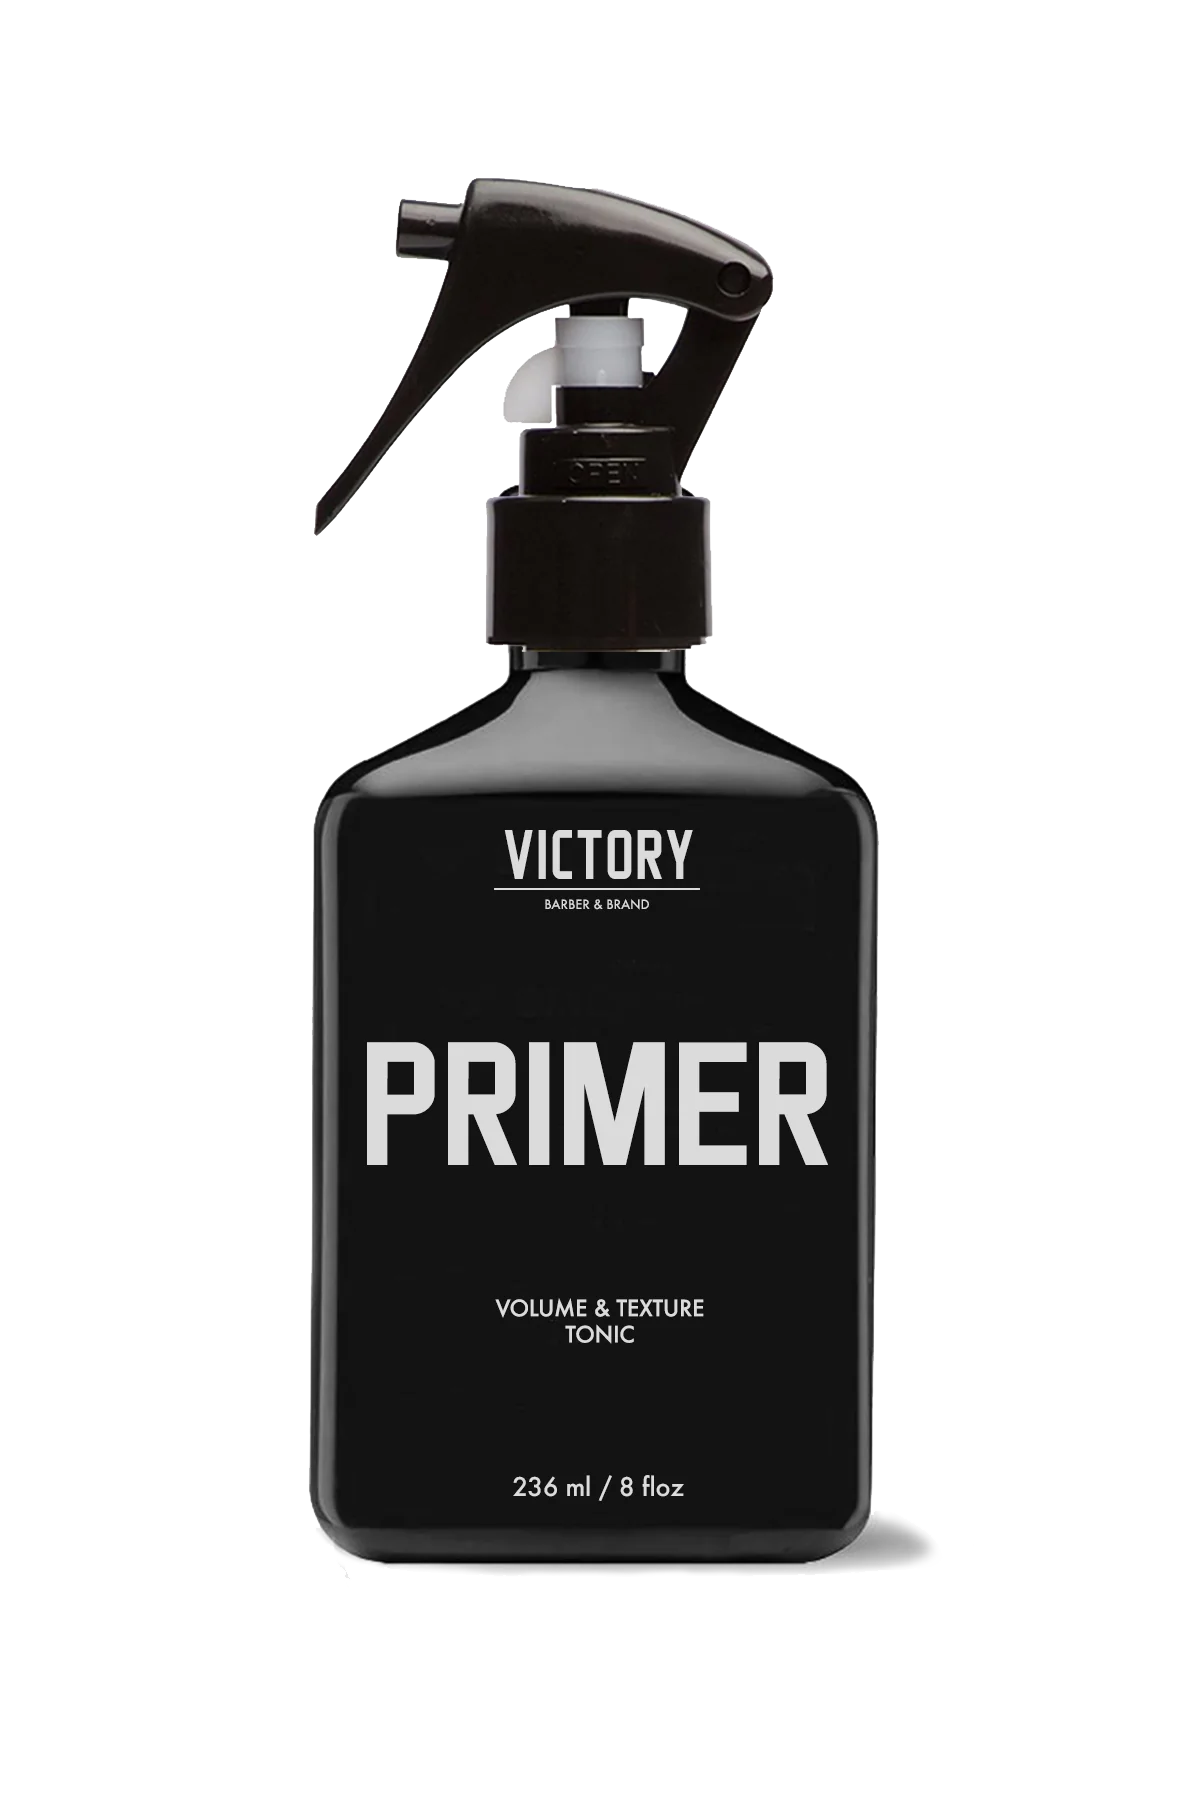 Victory Primer Volume &Texture Tonic